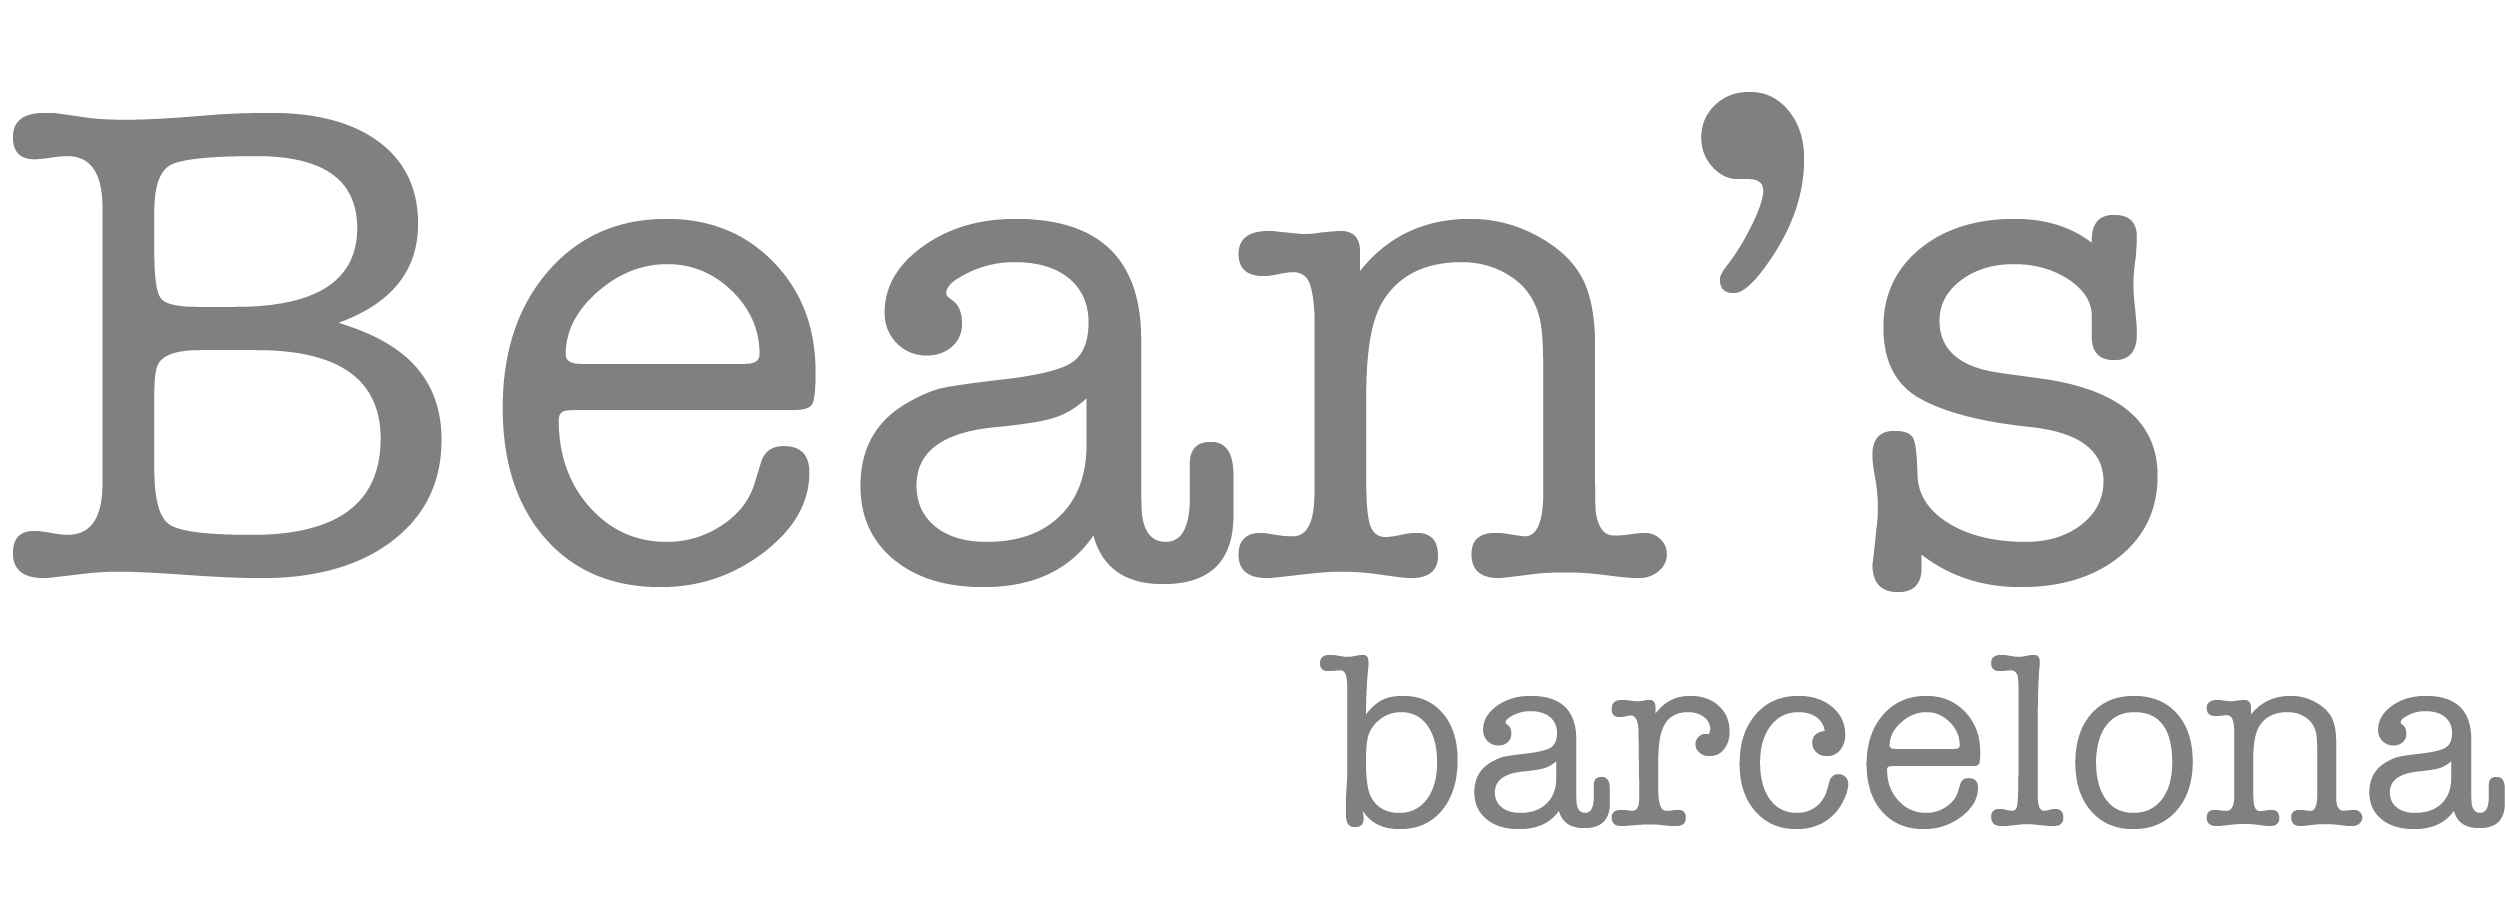 Bean's Barcelona